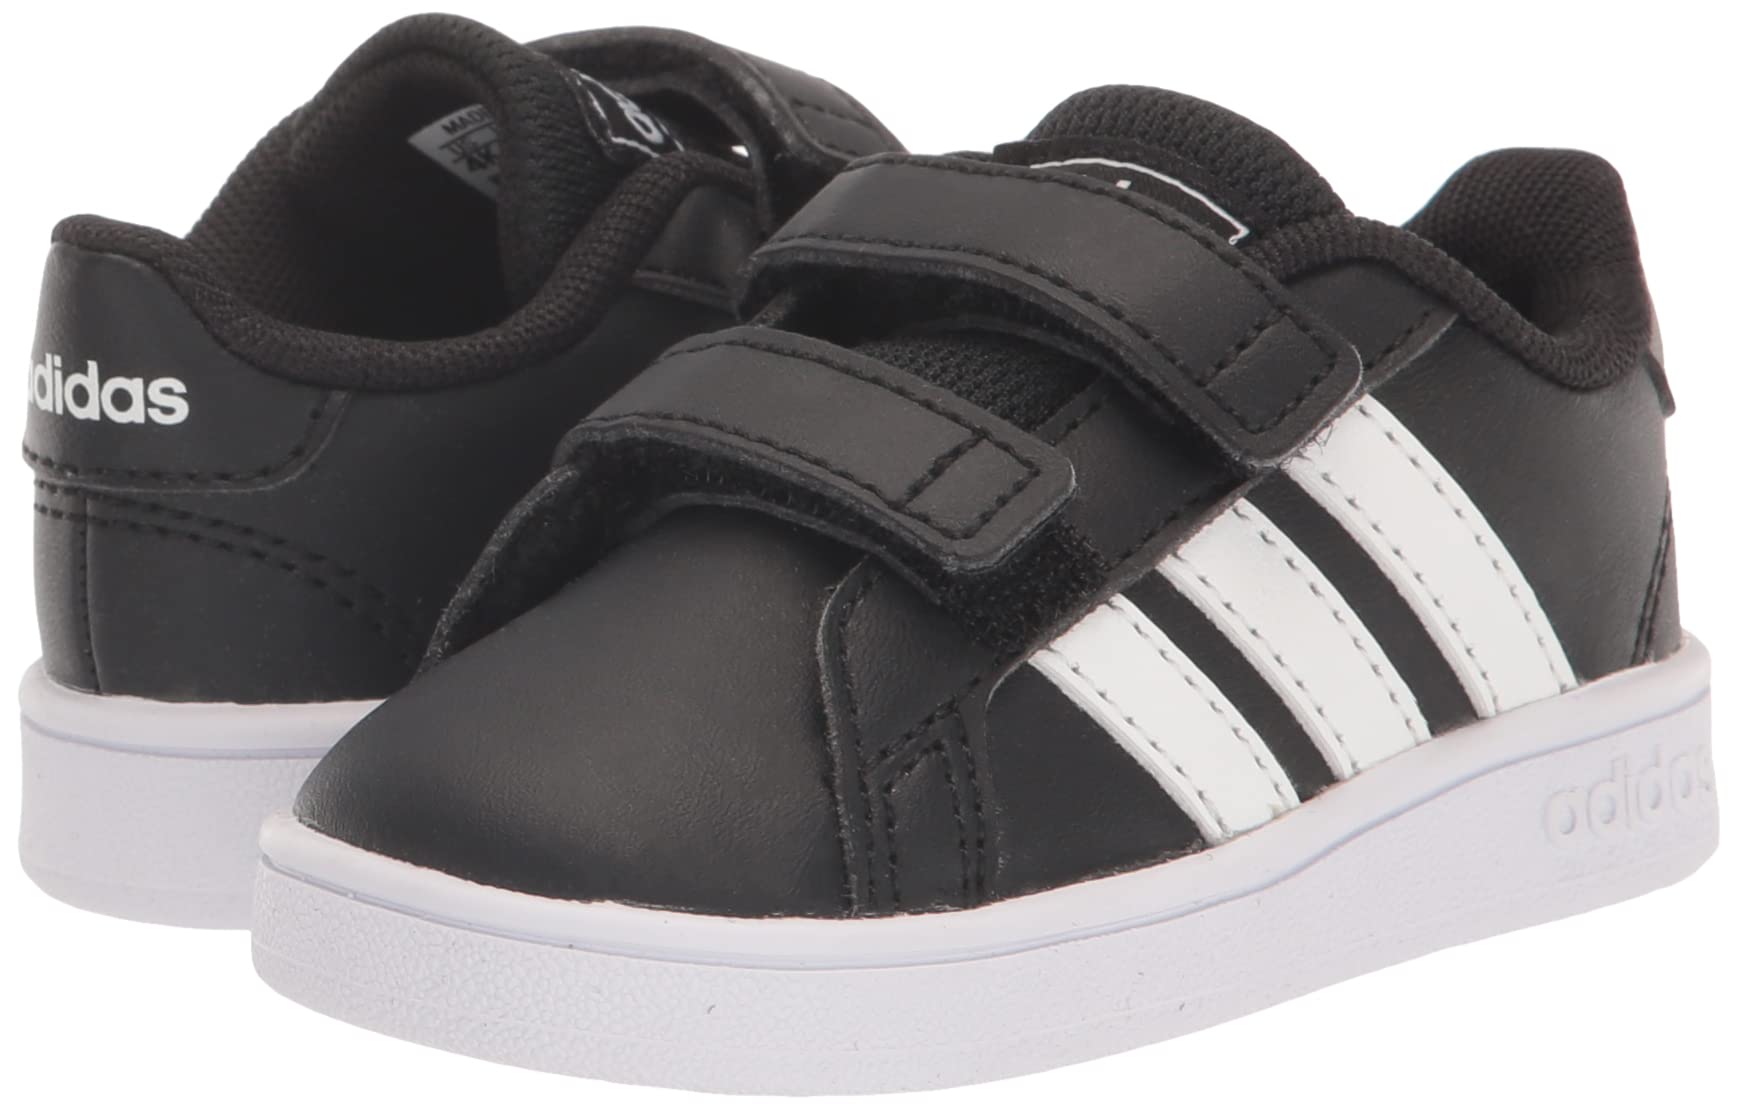 adidas unisex baby Grand Court Tennis Shoe, Black/White/White, 7.5 Toddler US